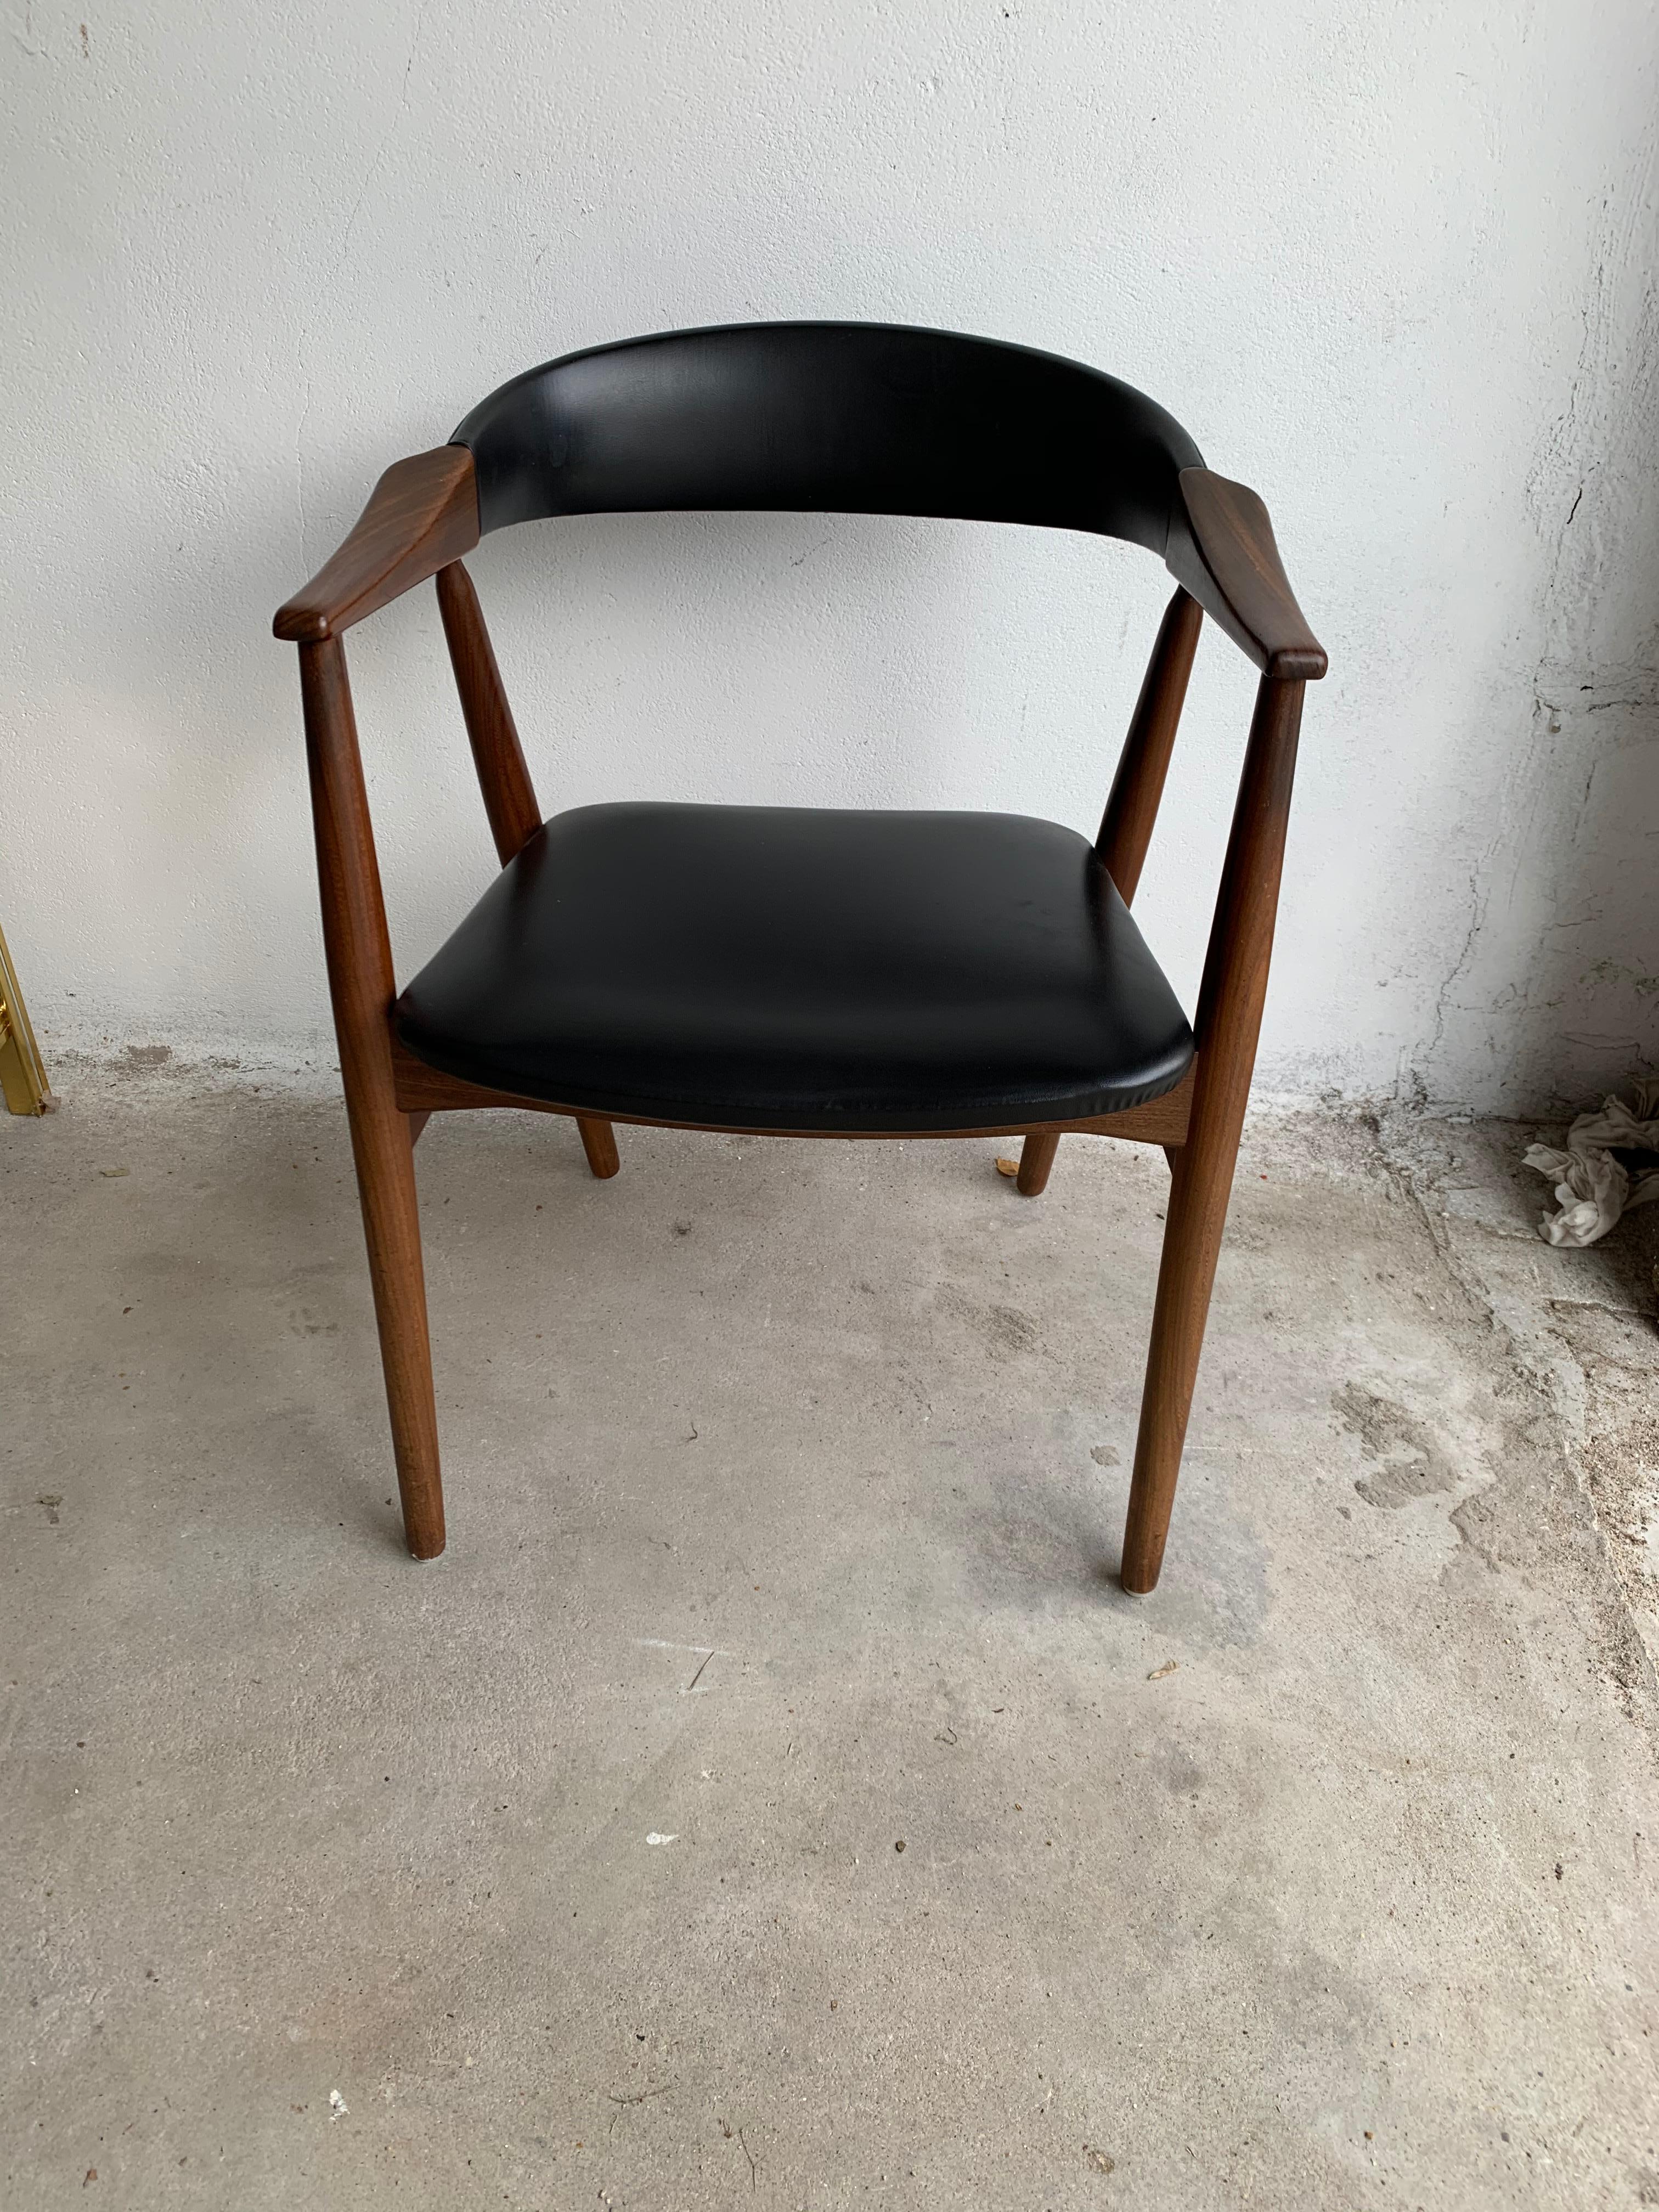 Danish 20th Century Scandinavian Modern Black Teak Chair from Farstrup Møbler, 1960s